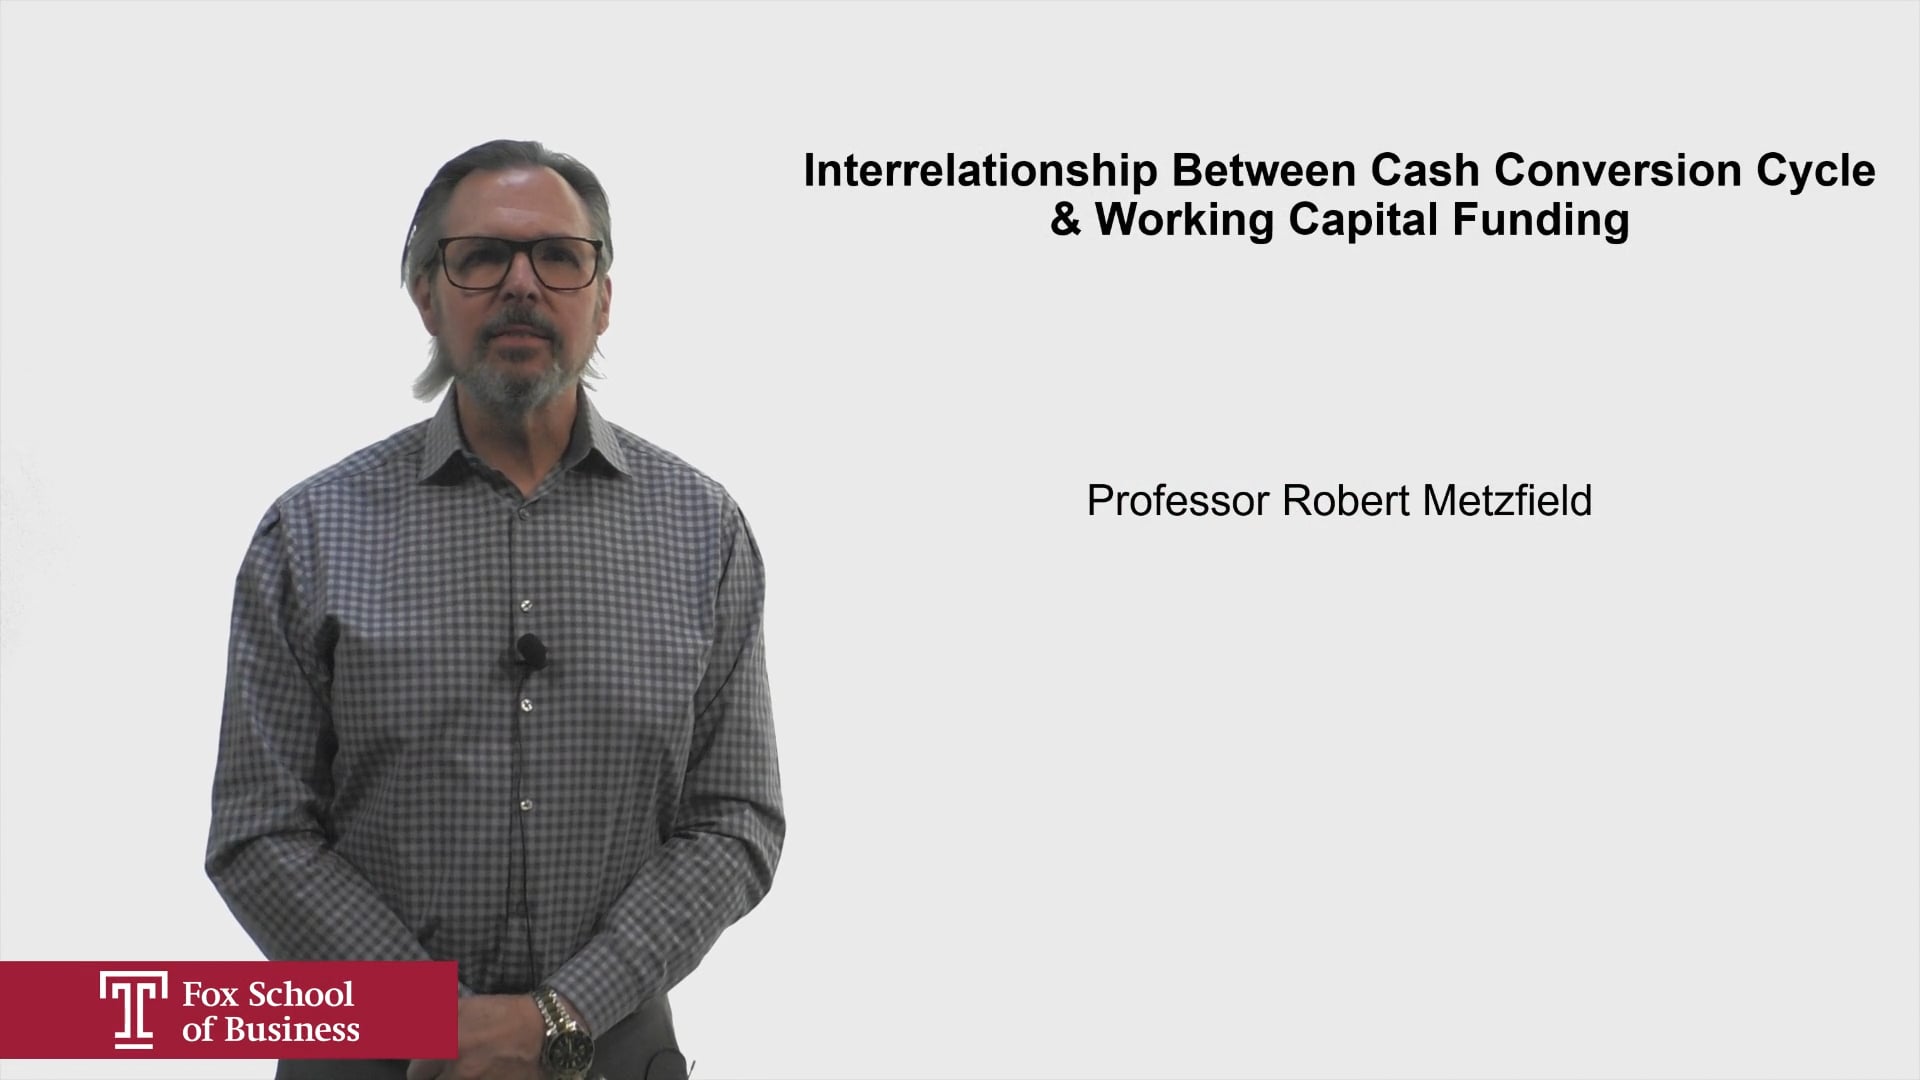 Interrelationship between Cash Conversion Cycle & Working Capital Funding